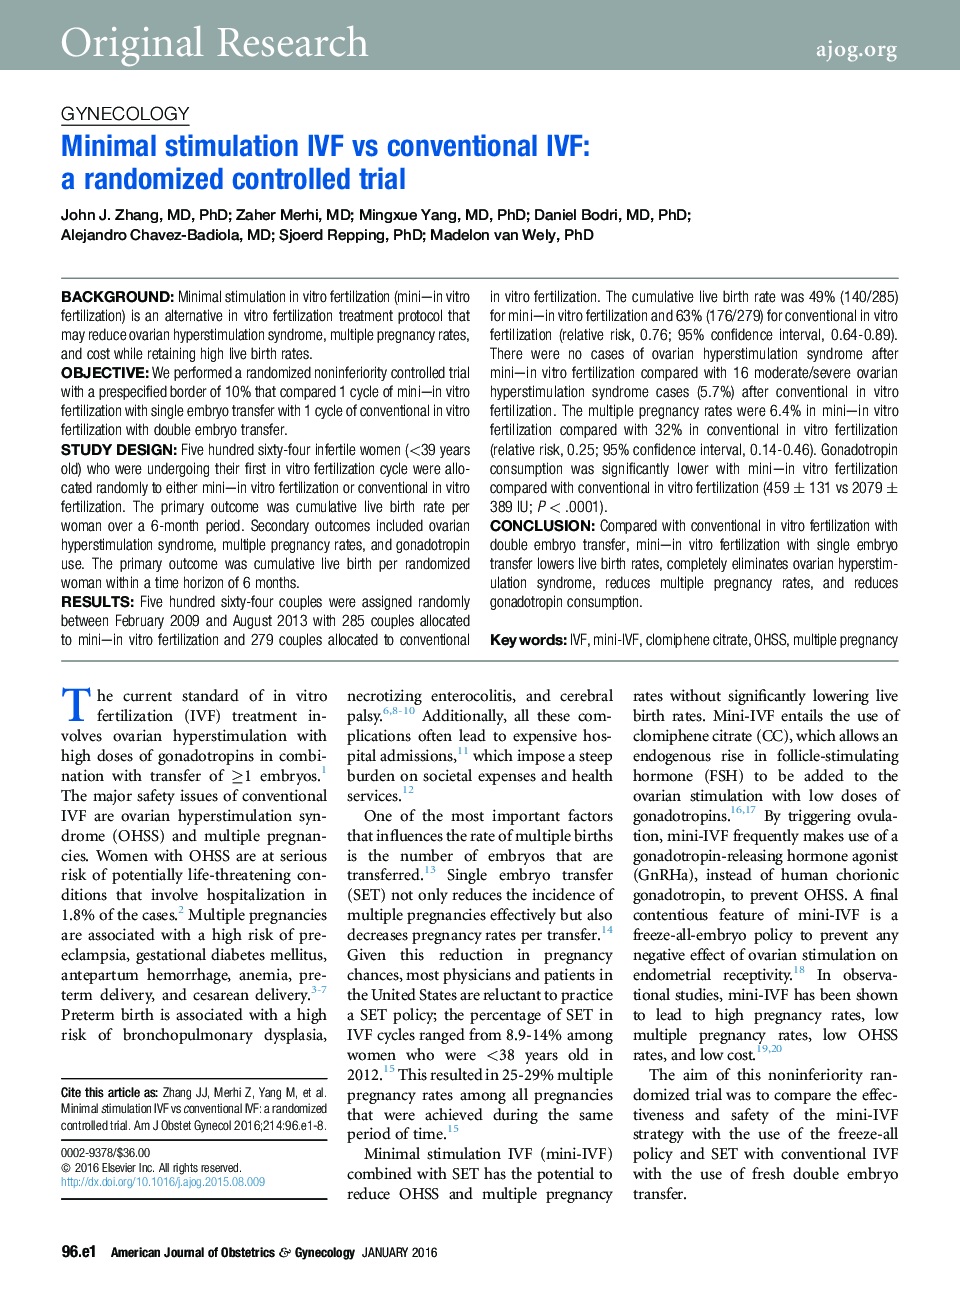 Minimal stimulation IVF vs conventional IVF: a randomized controlled trial